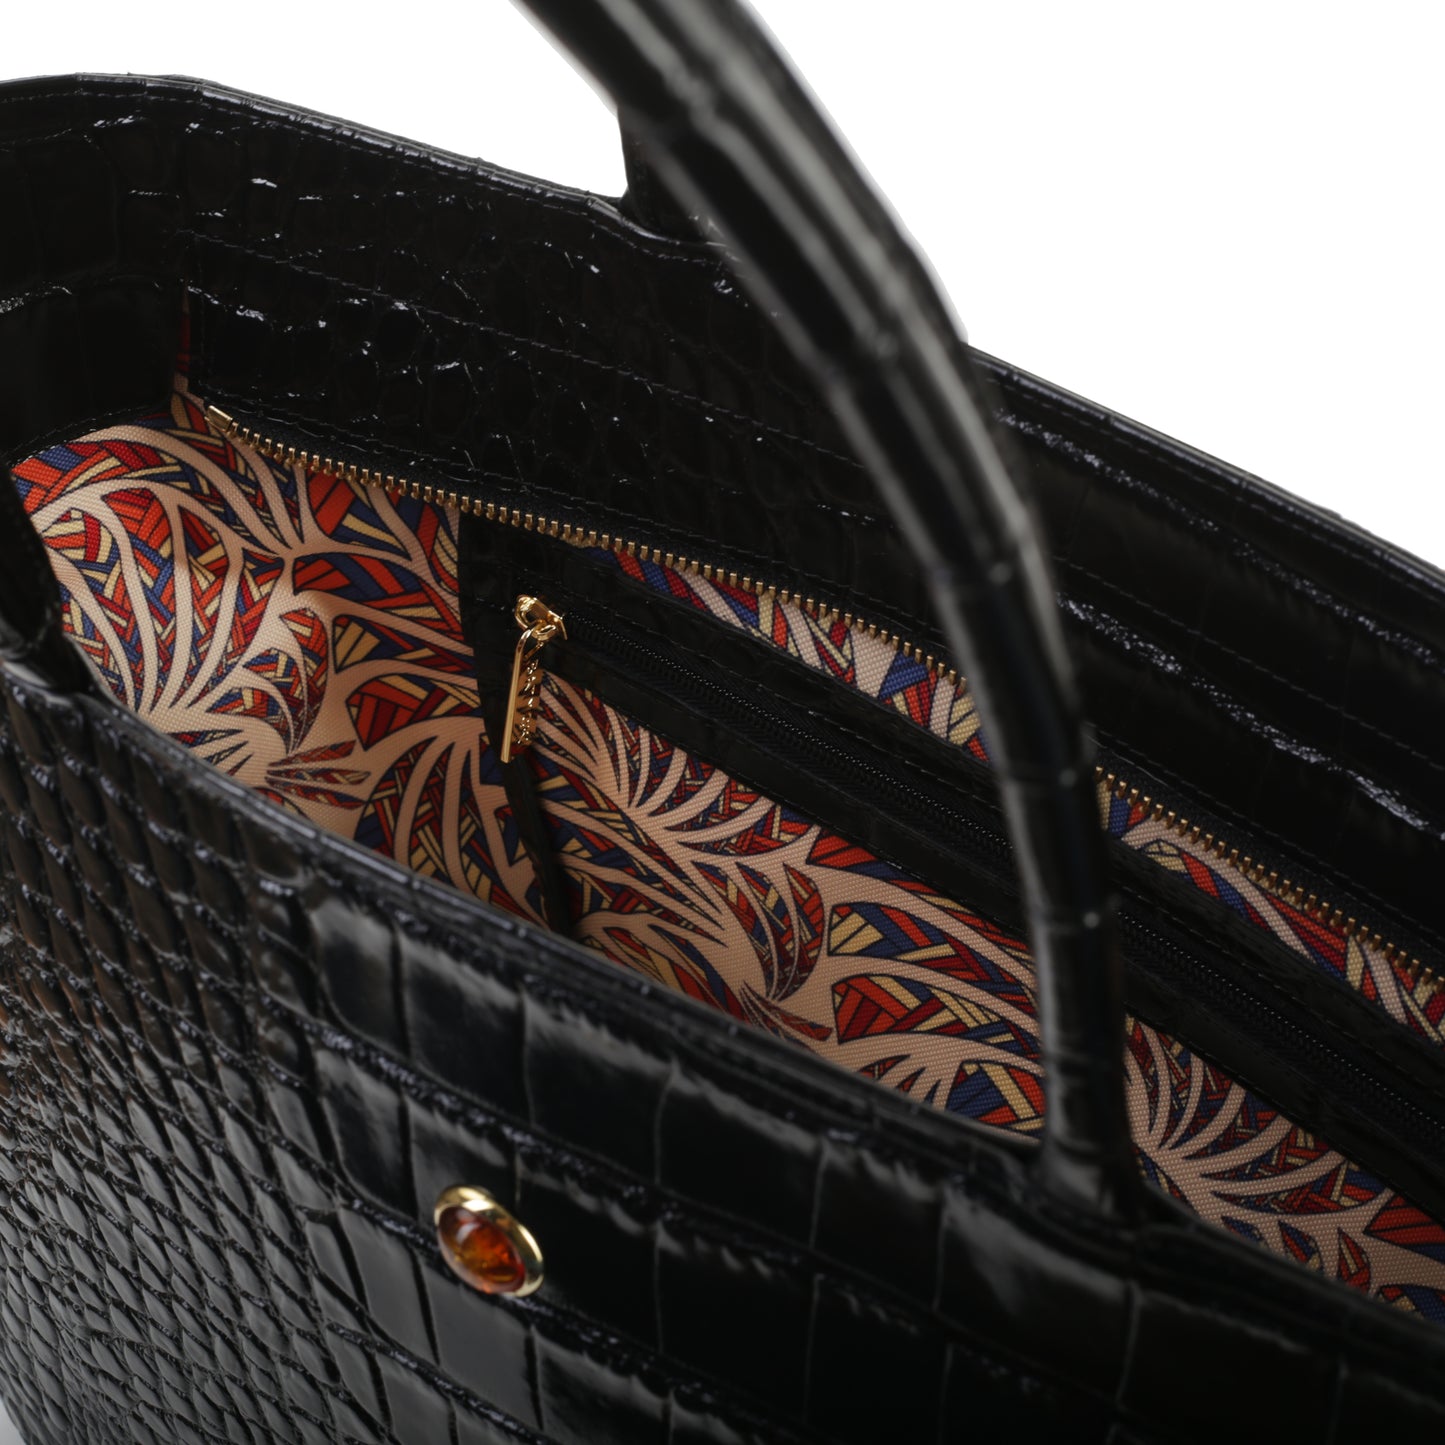 CARICA BLACK women's leather handbag